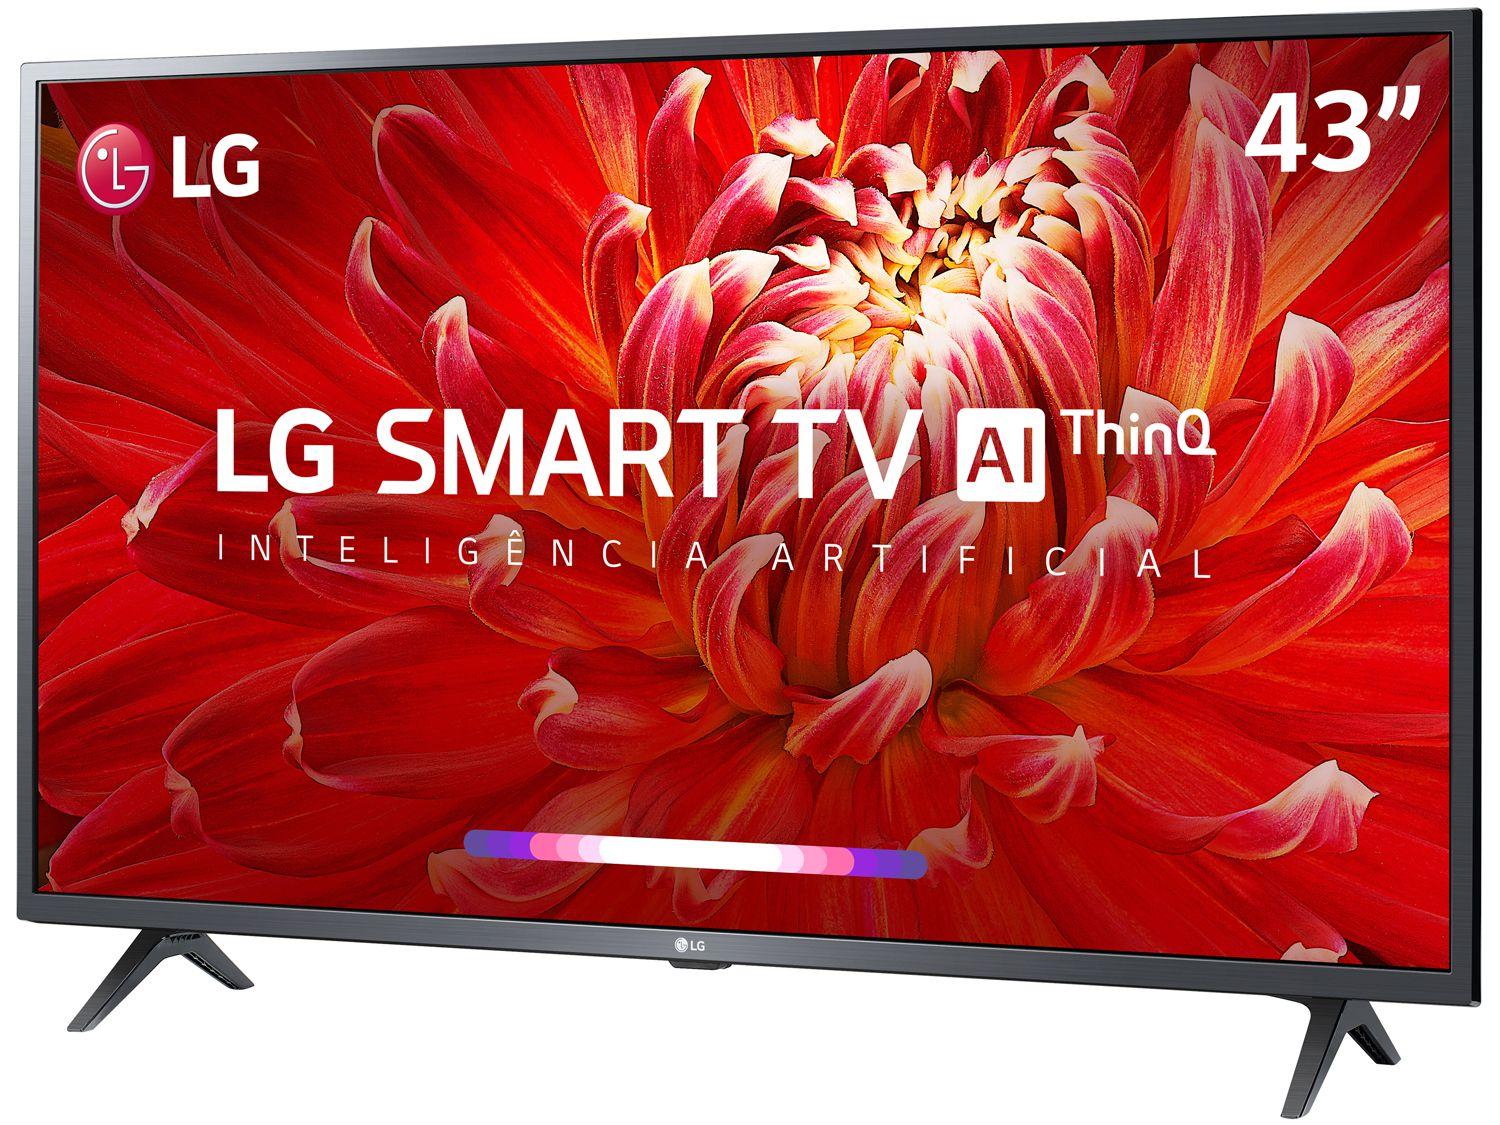 Смарт телевизор купить воронеж. LG 43lm5700 Smart TV. Телевизор LG Smart TV 43. Телевизор LG 43 смарт. Телевизор LG Smart TV 43 дюйма.